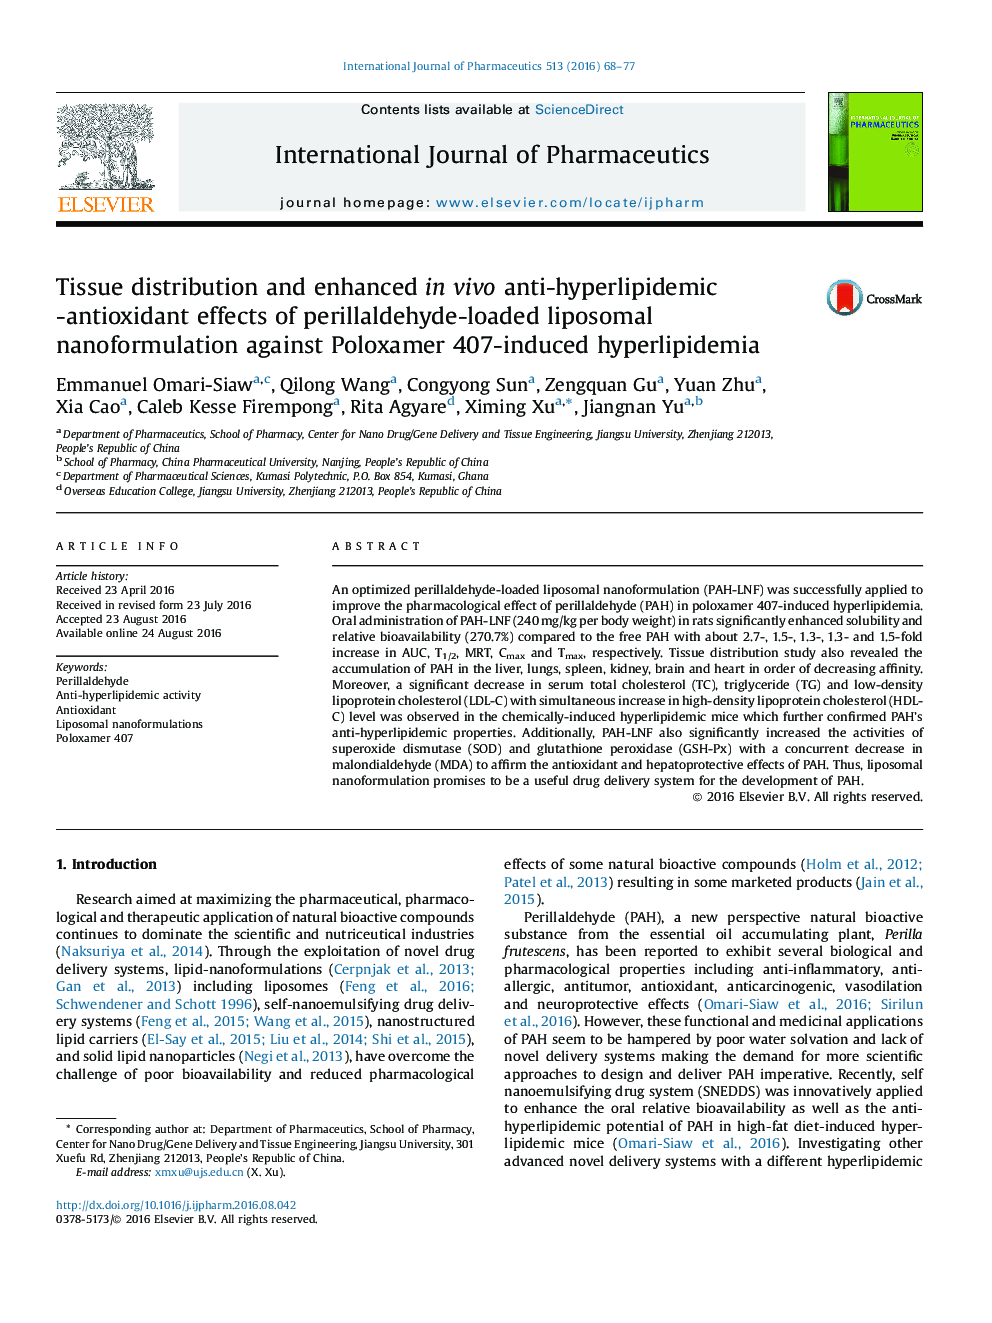 Tissue distribution and enhanced in vivo anti-hyperlipidemic-antioxidant effects of perillaldehyde-loaded liposomal nanoformulation against Poloxamer 407-induced hyperlipidemia